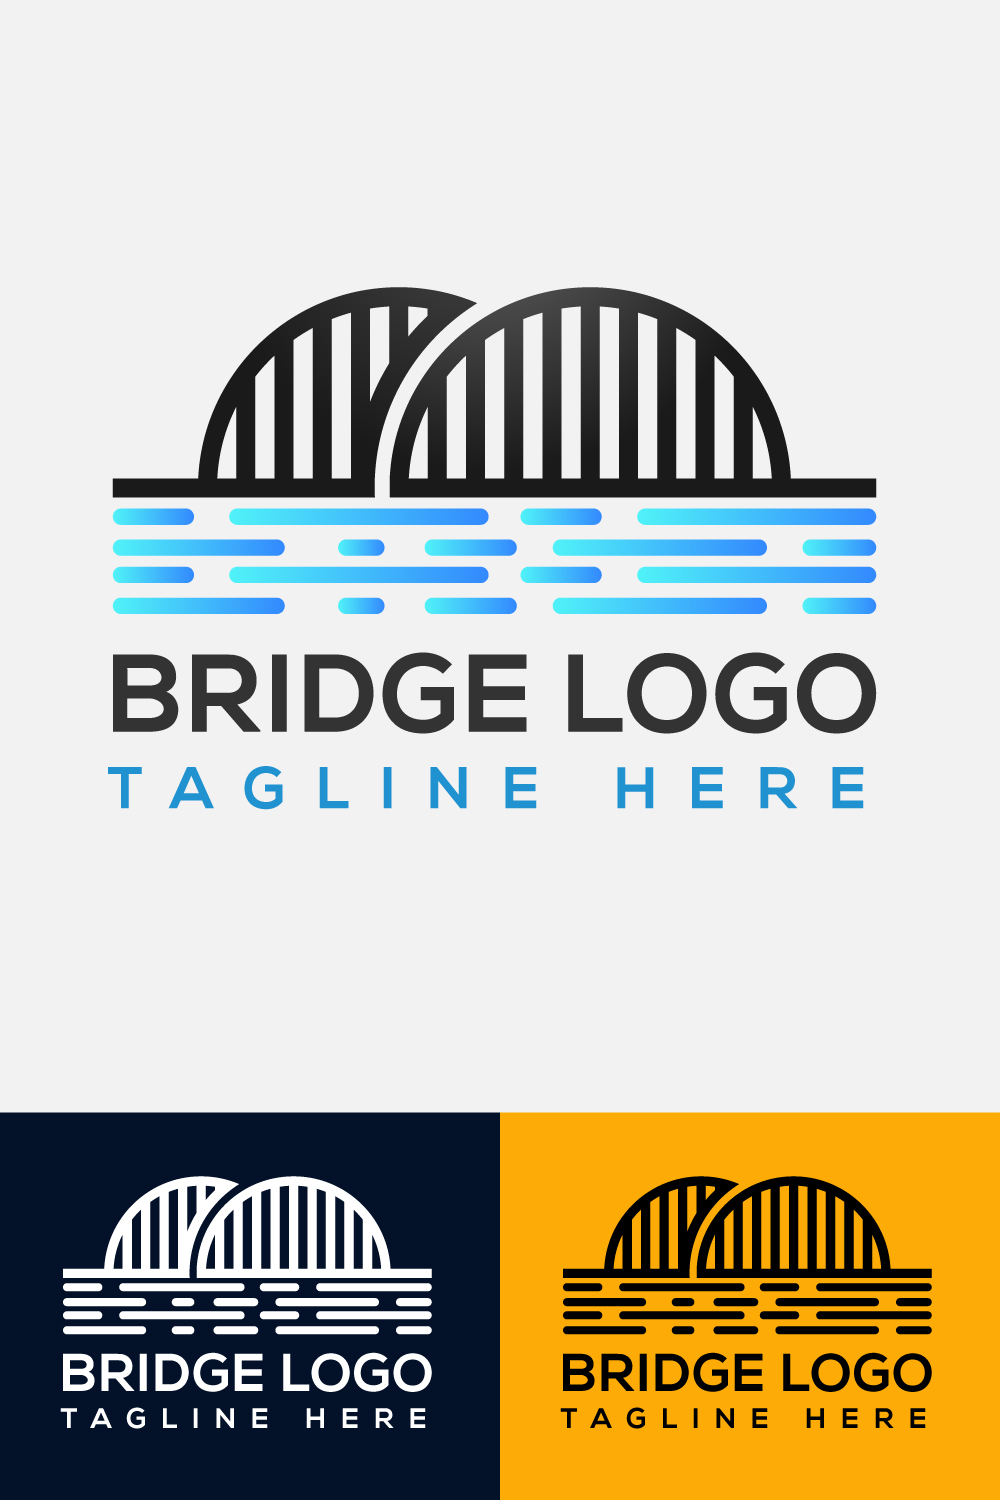 Bridge Logo Template for Company Identity Pinterest image.